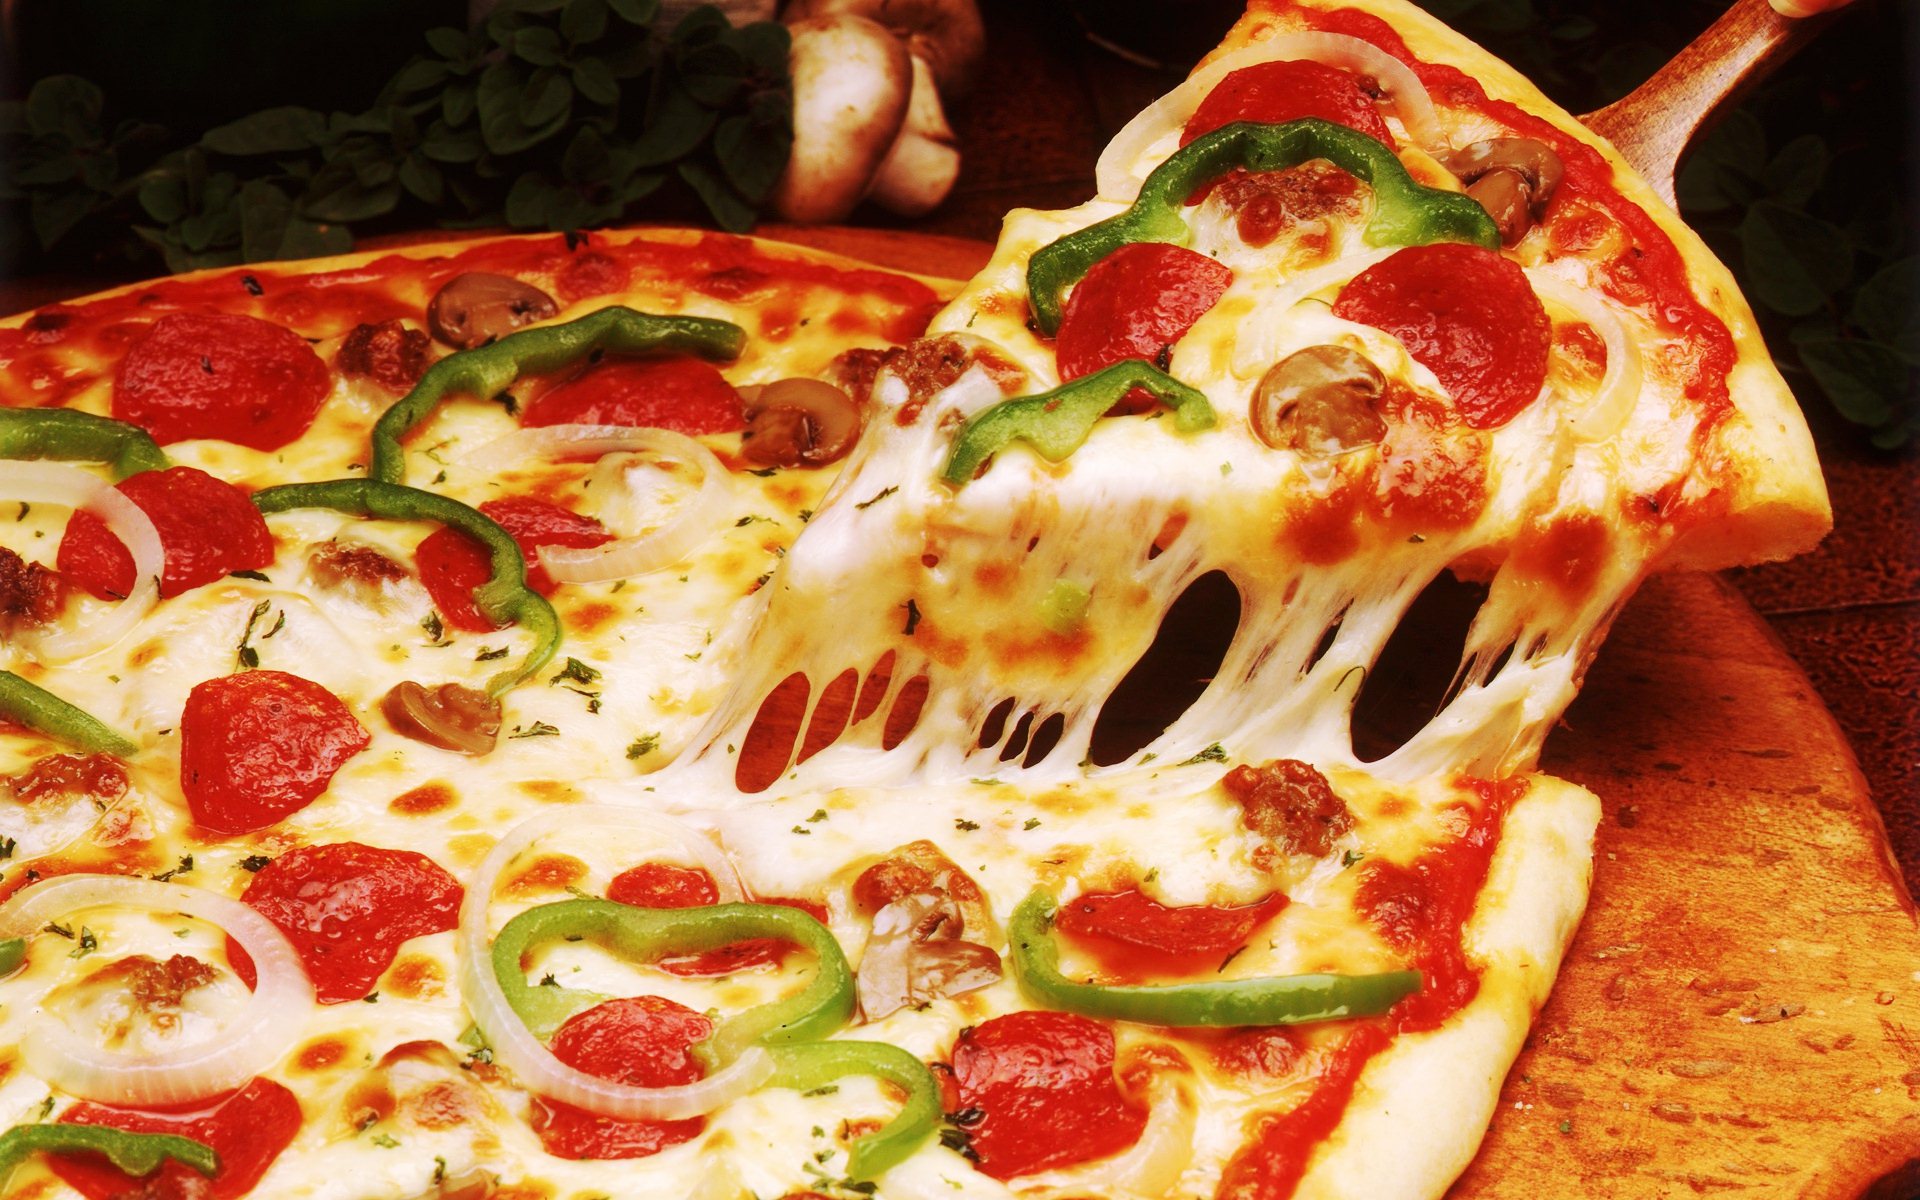 Pizza - Chesse, Veggie, Pepperoni - $2.99 each slice